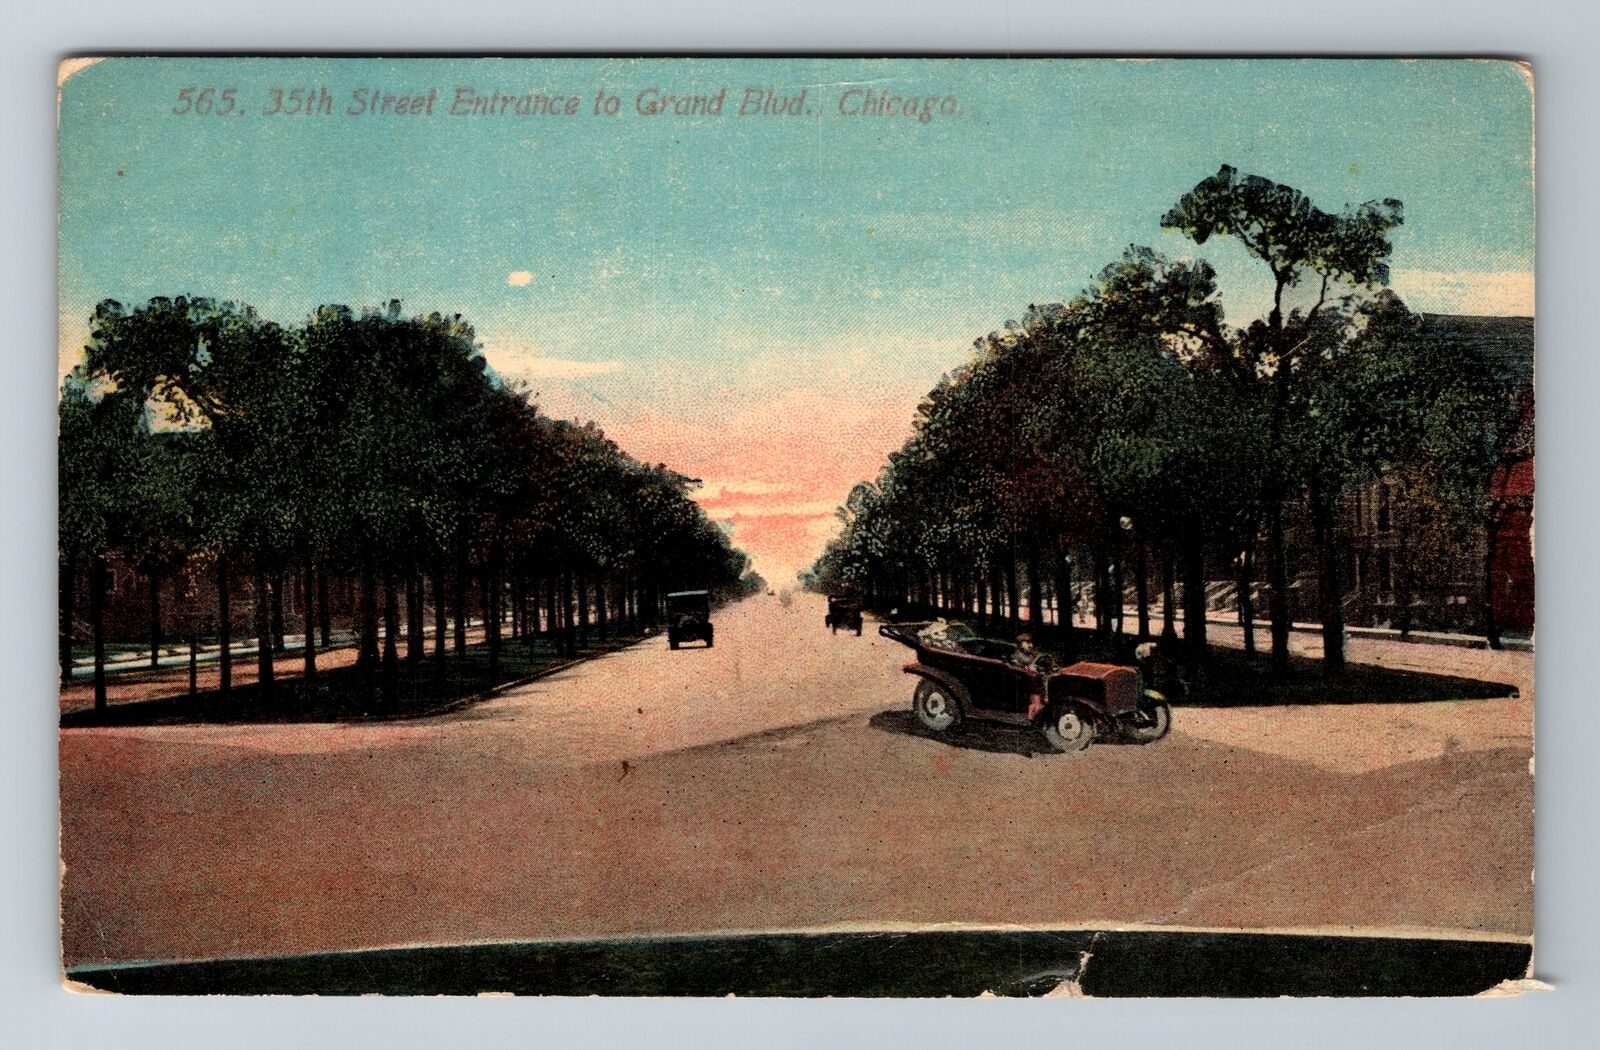 Chicago IL-Illinois, 35th Street Entrance to Grand Blvd Antique Vintage Postcard